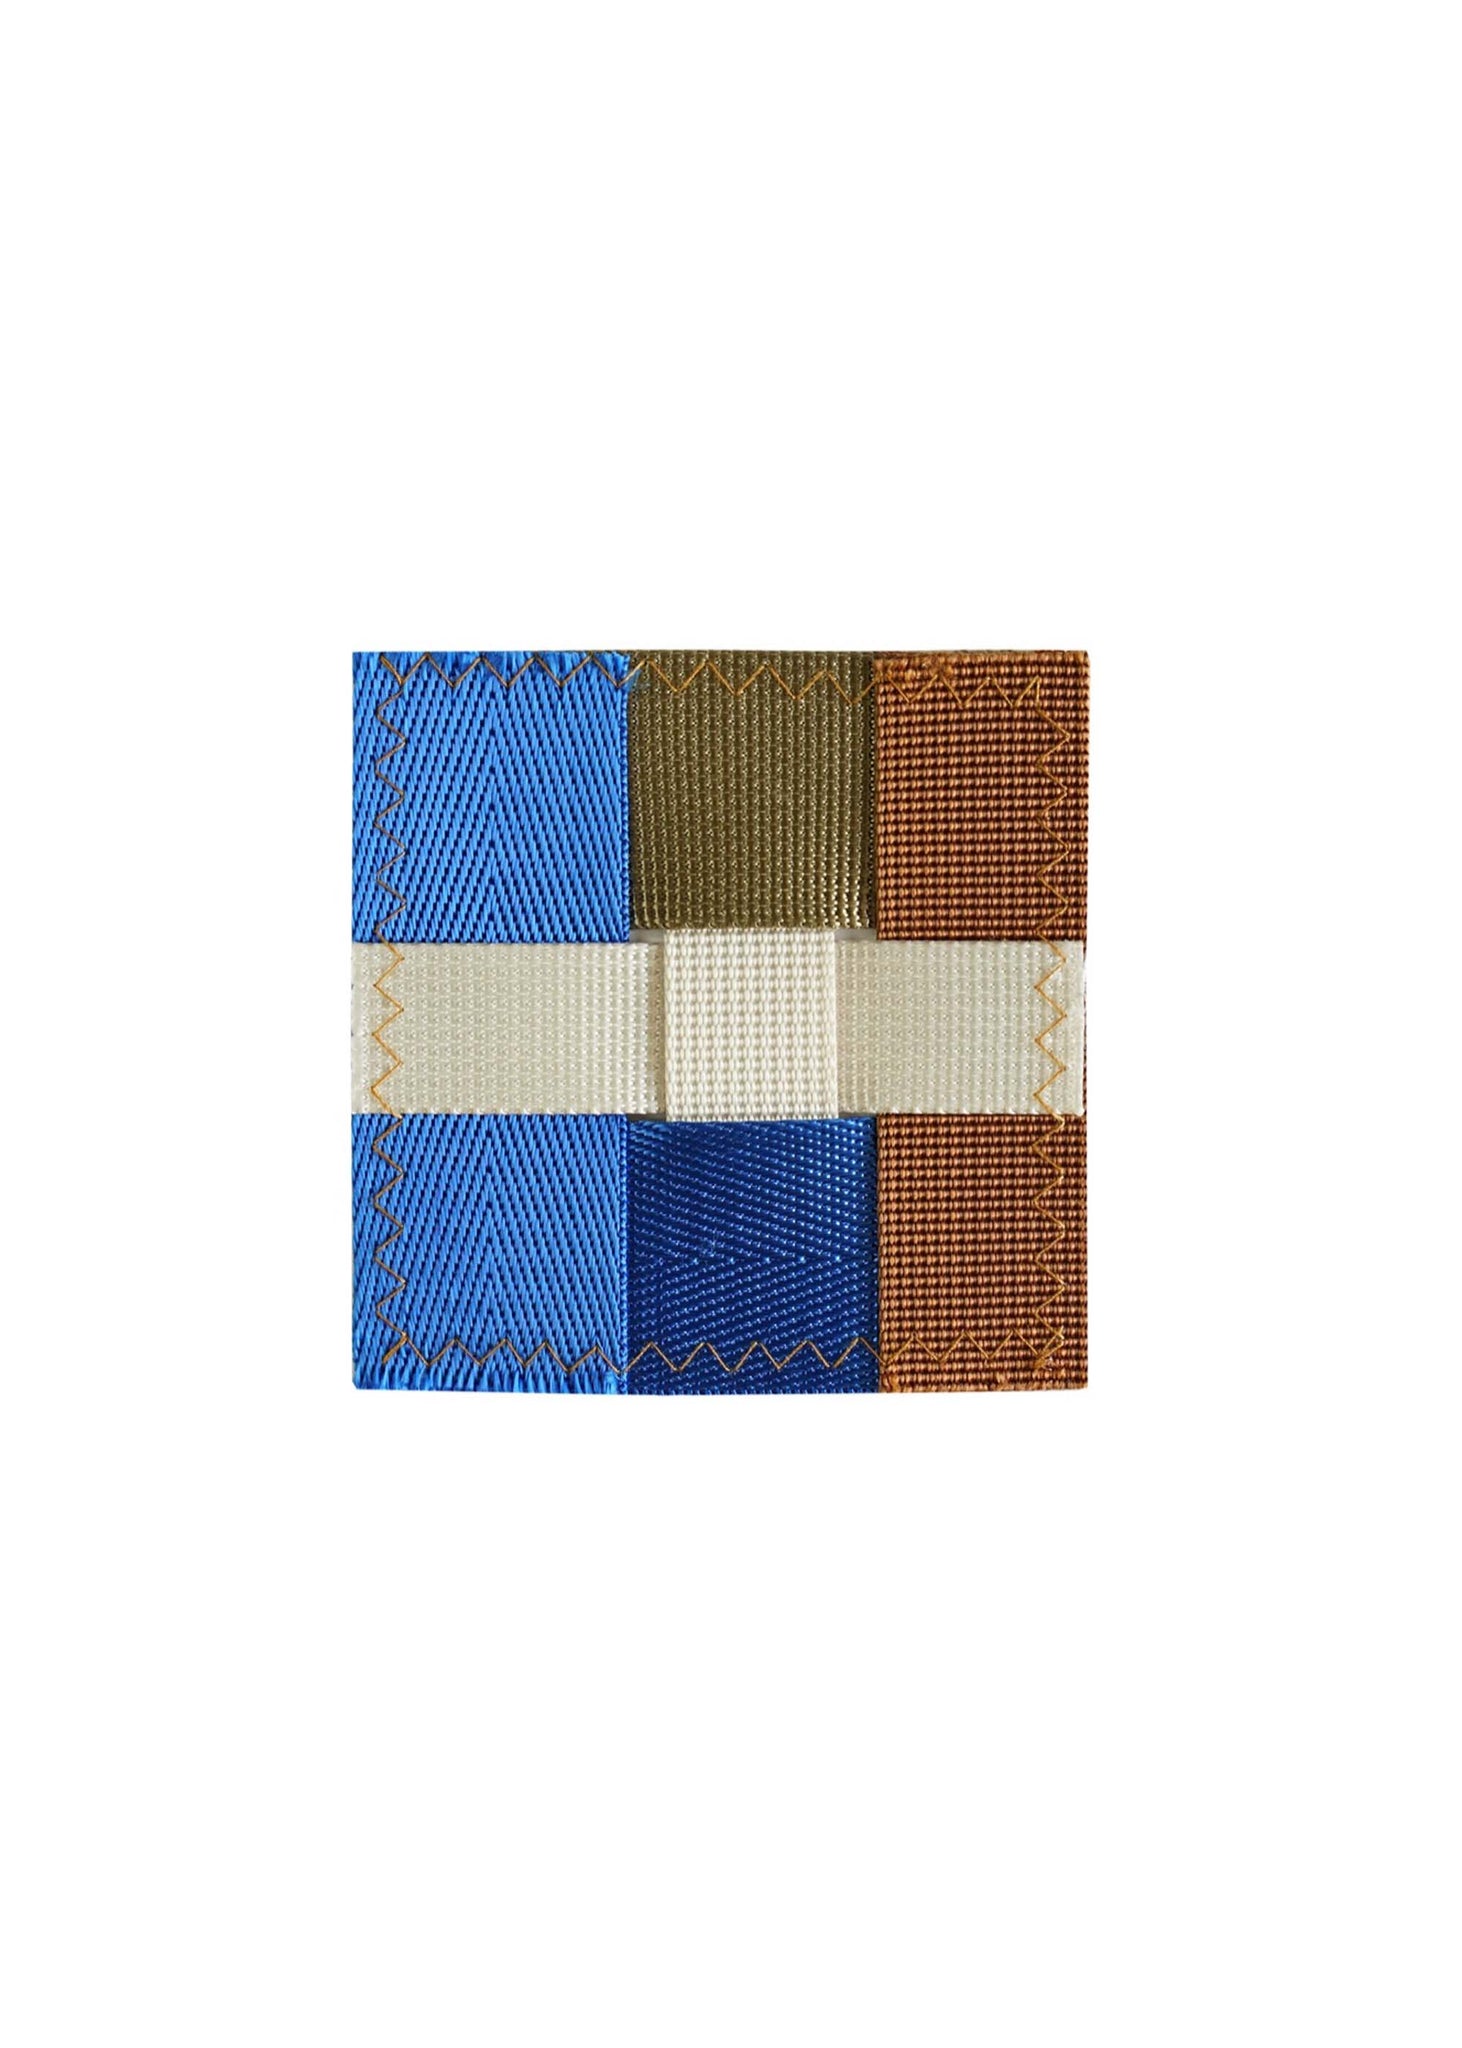 TANCHEN: Blue/Tan/Cream Knit Nylon Coaster - 157Moments